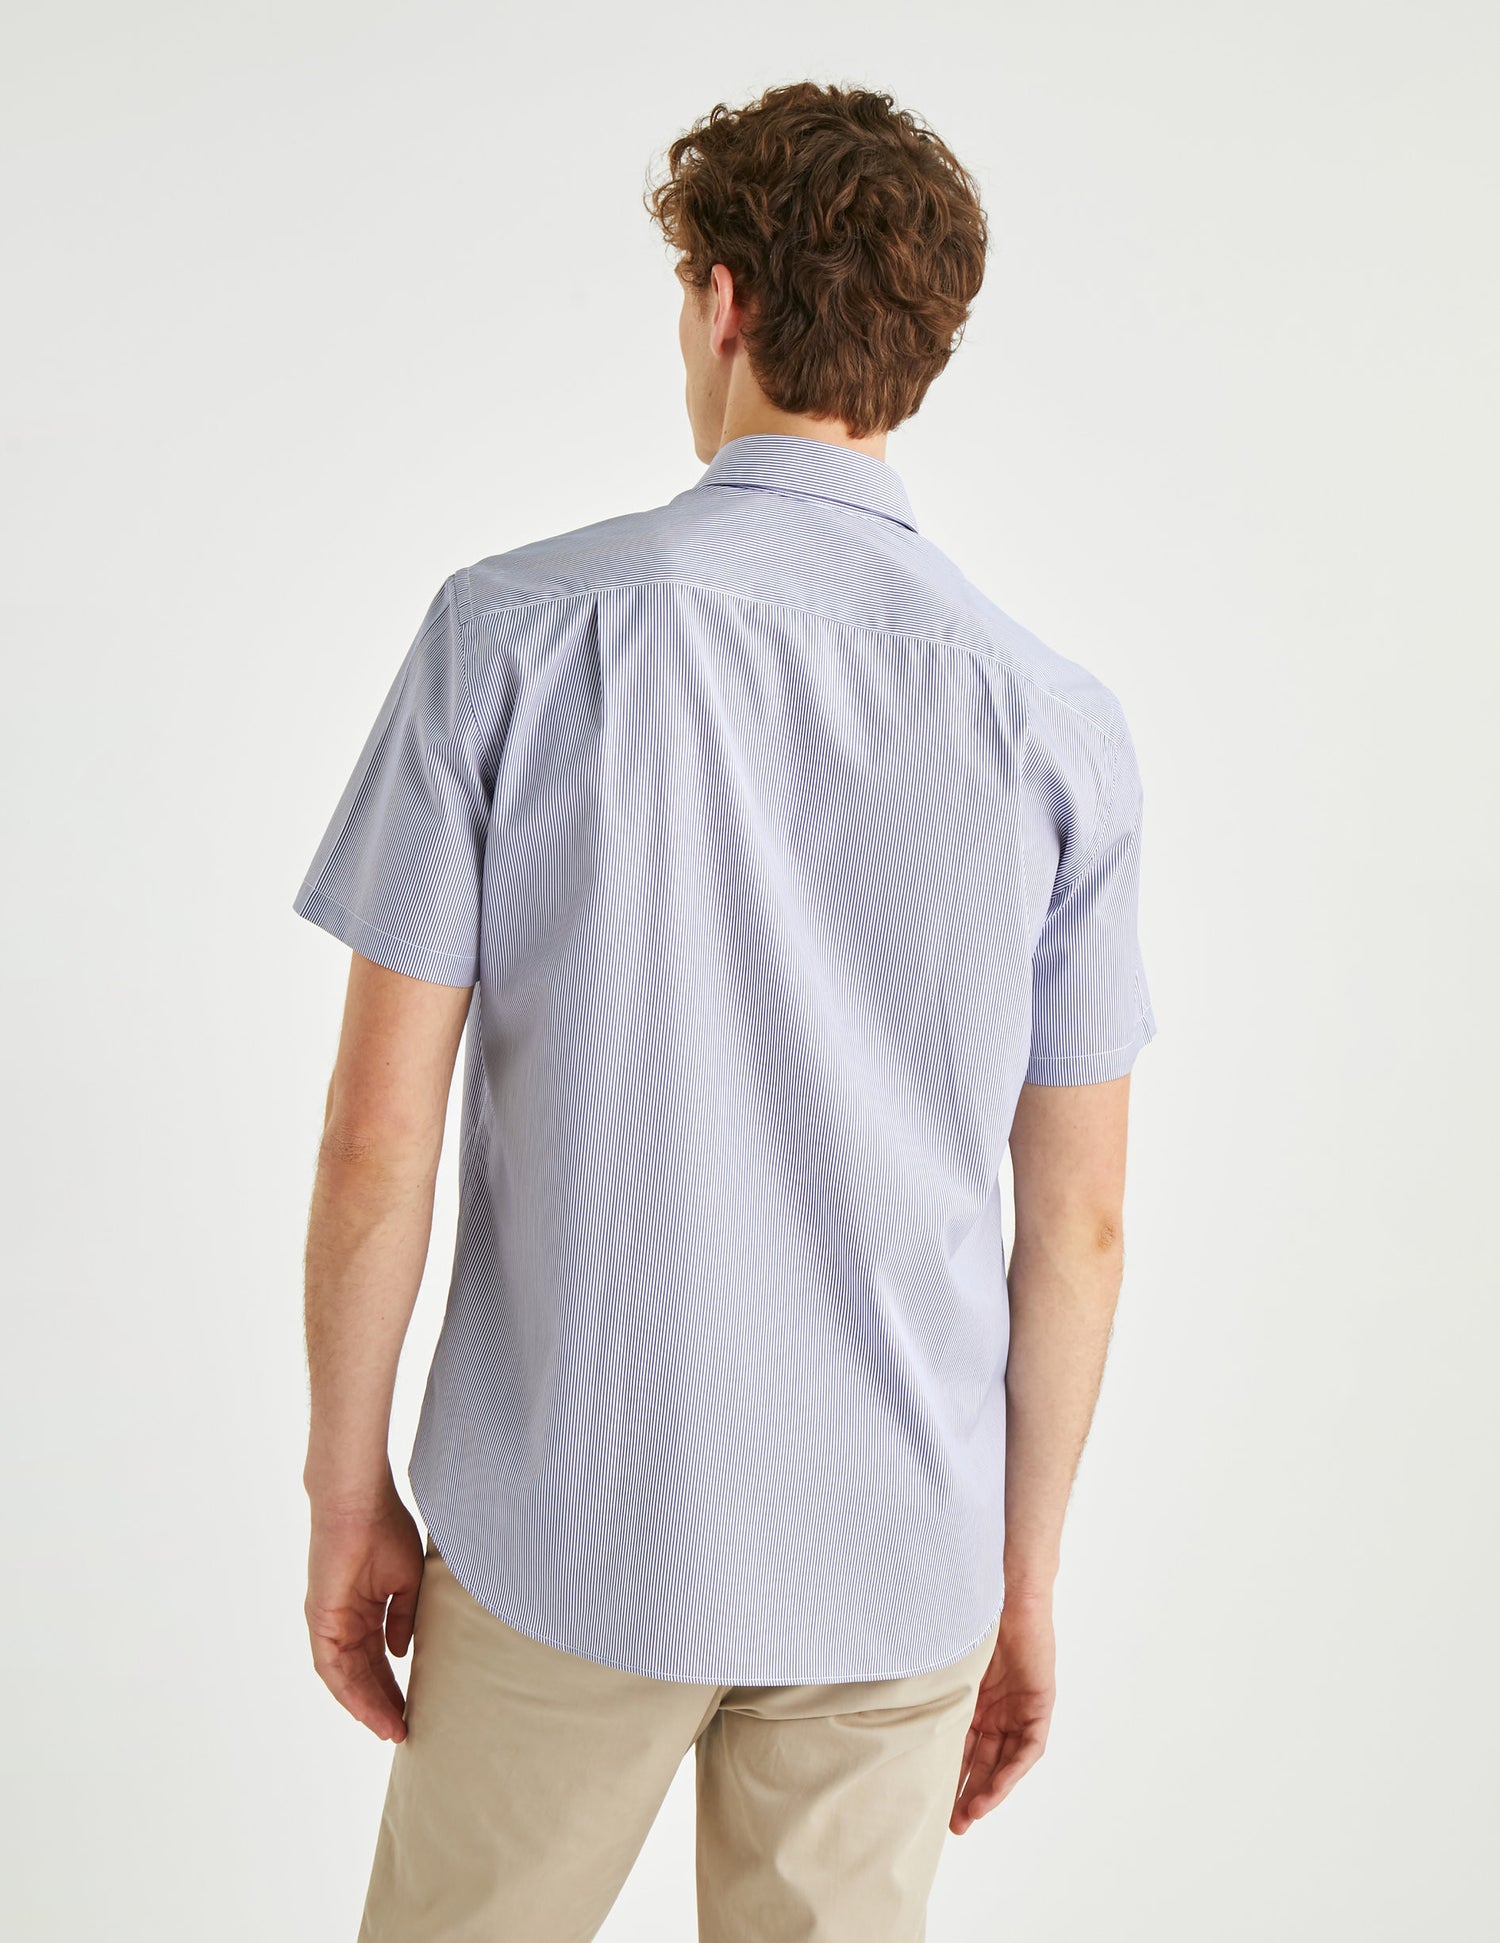 Blue Striped Classic Shirt - Poplin - American Collar#4